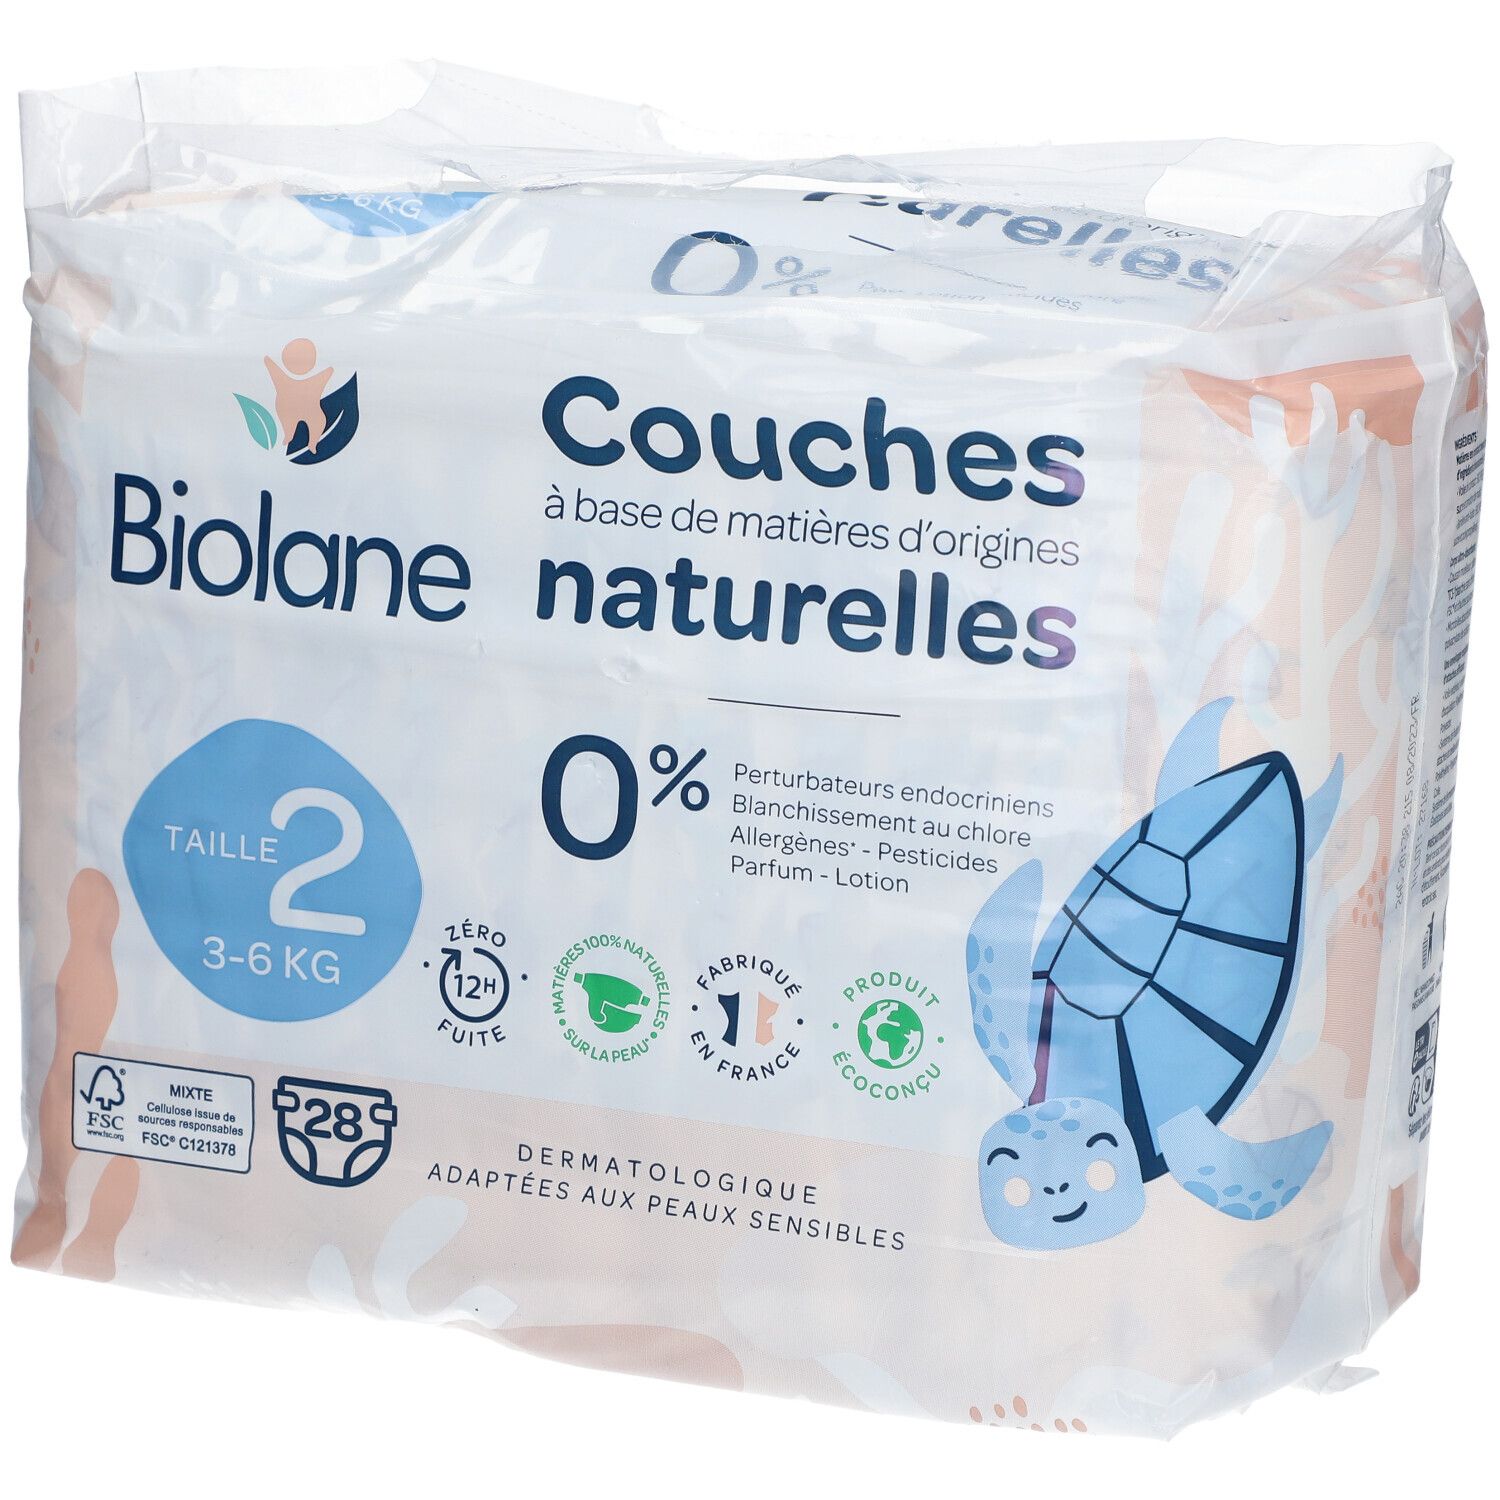 Biolane Couches Naturelles 28 Couches Taille 2 (3-6 Kg)